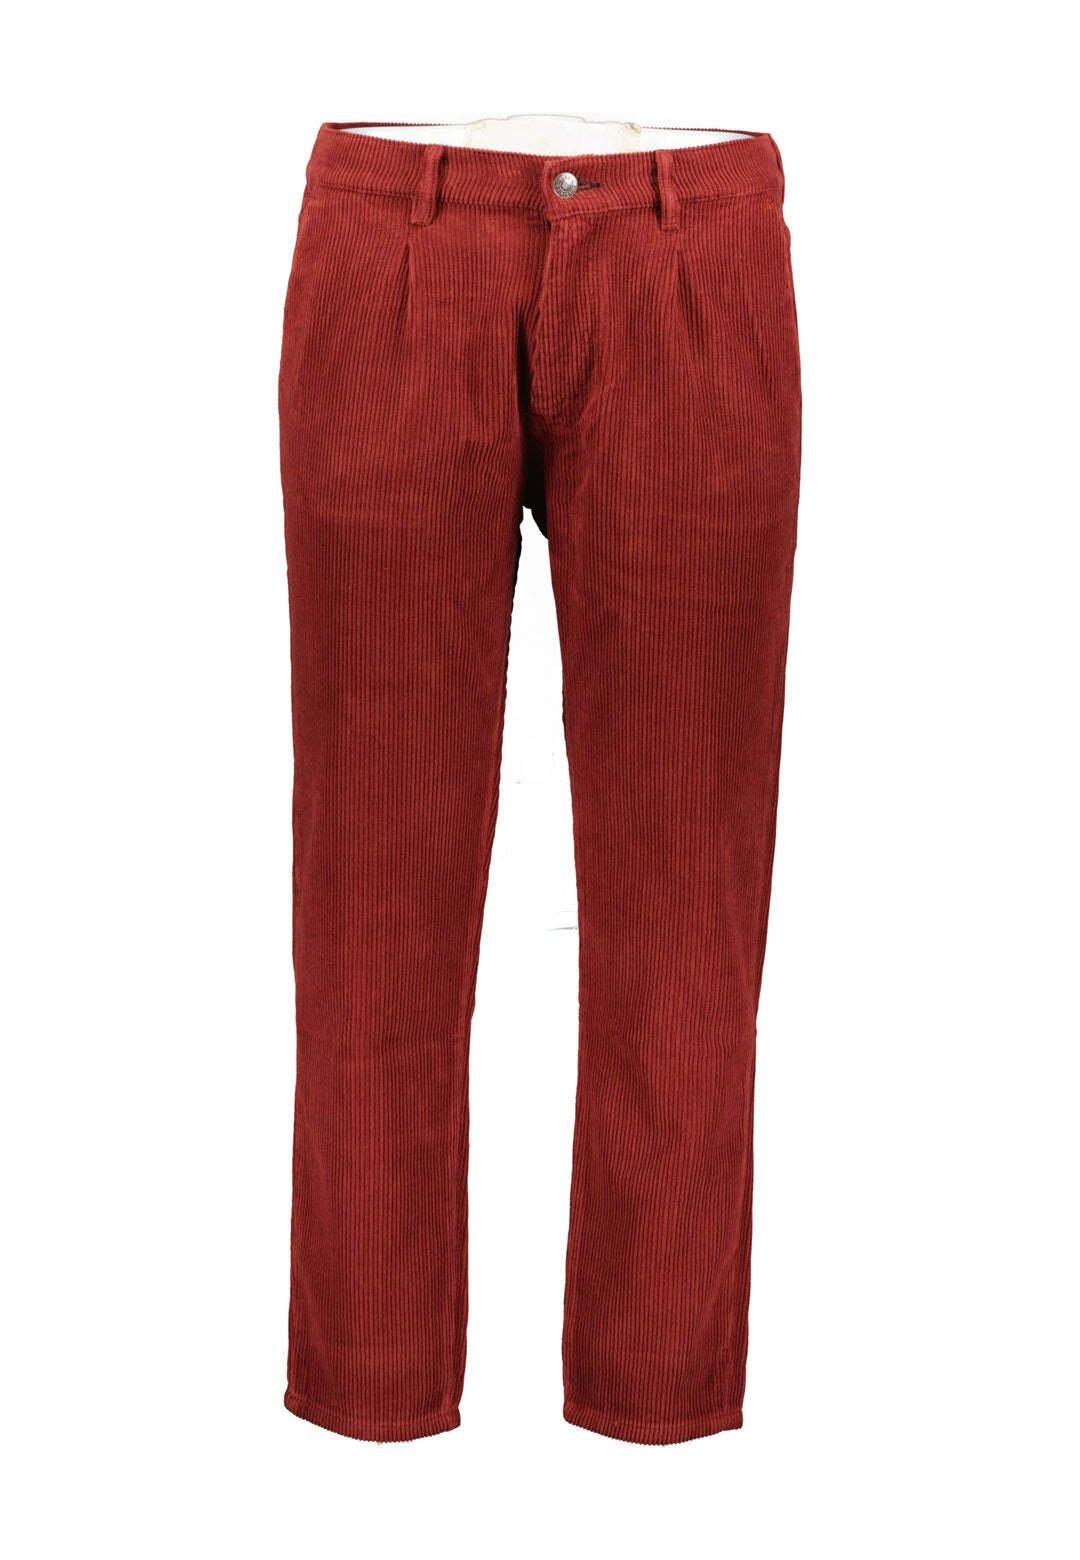 Hosen Pants-corduroy Herren Rot Bunt W36 von Colours & Sons